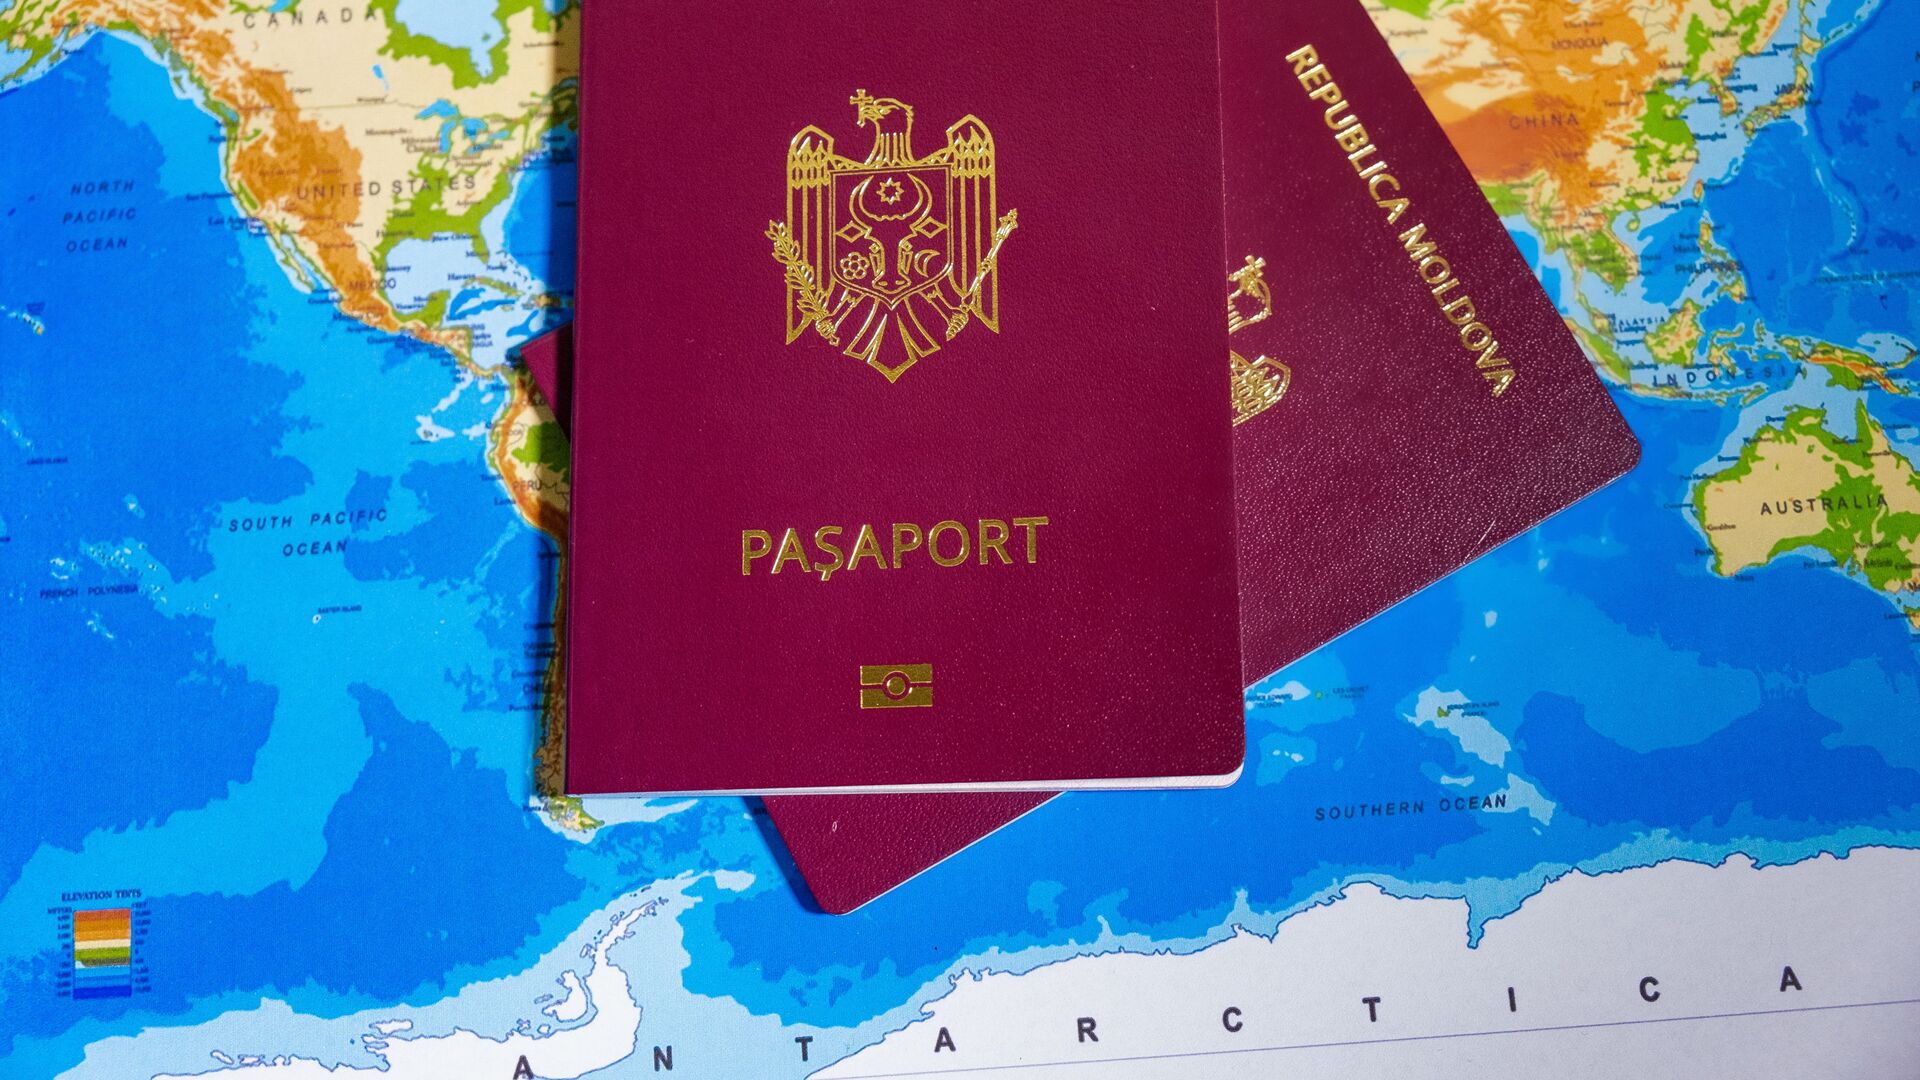 Pașaport biometric Republica Moldova  - Sputnik Moldova, 1920, 25.06.2022